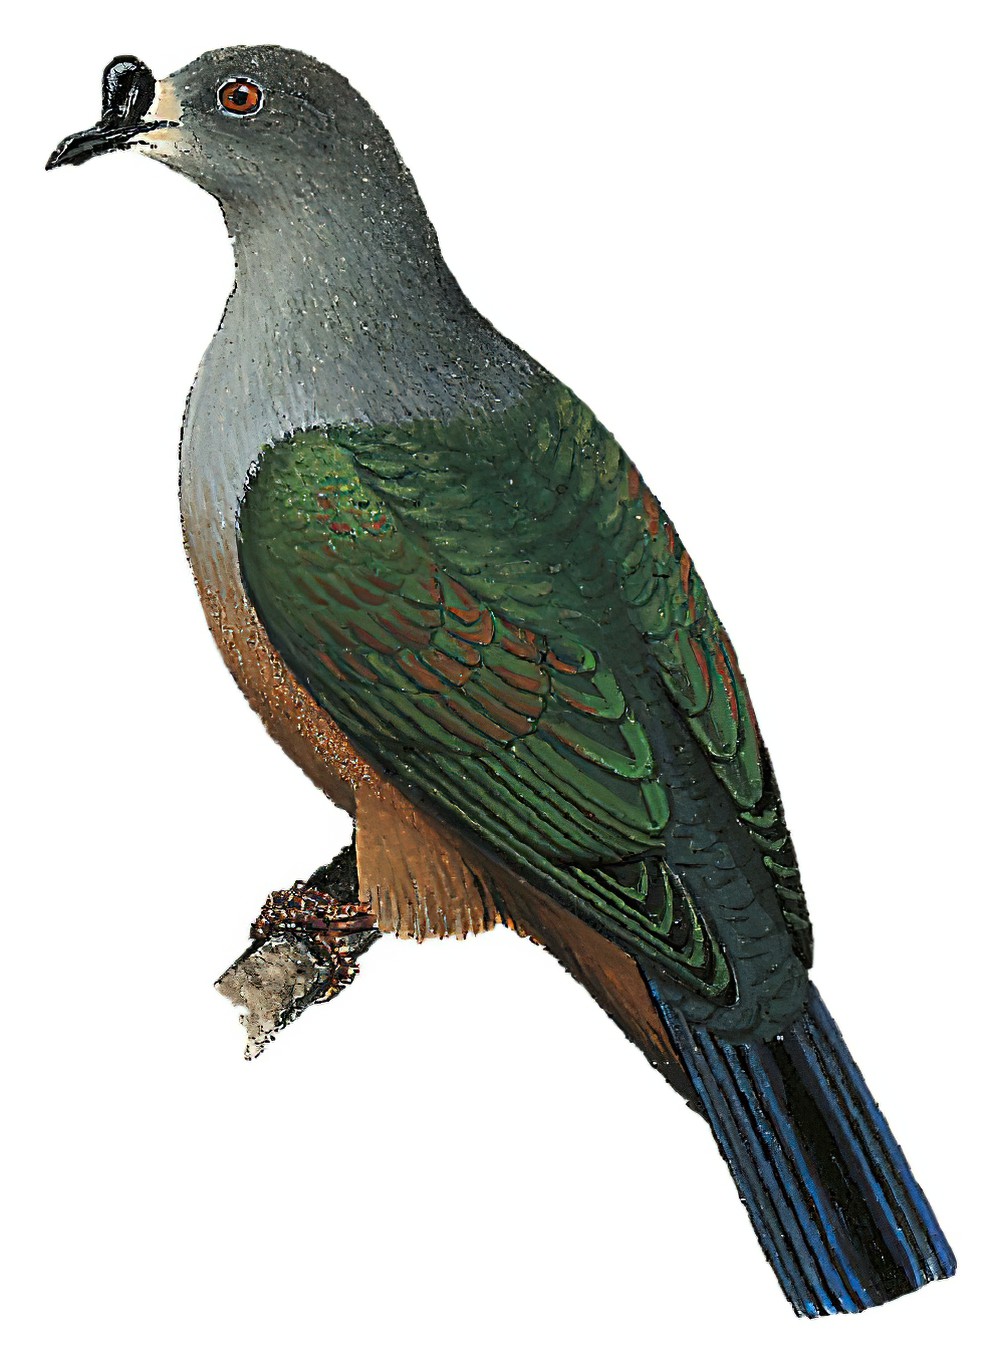 Micronesian Imperial-Pigeon / Ducula oceanica